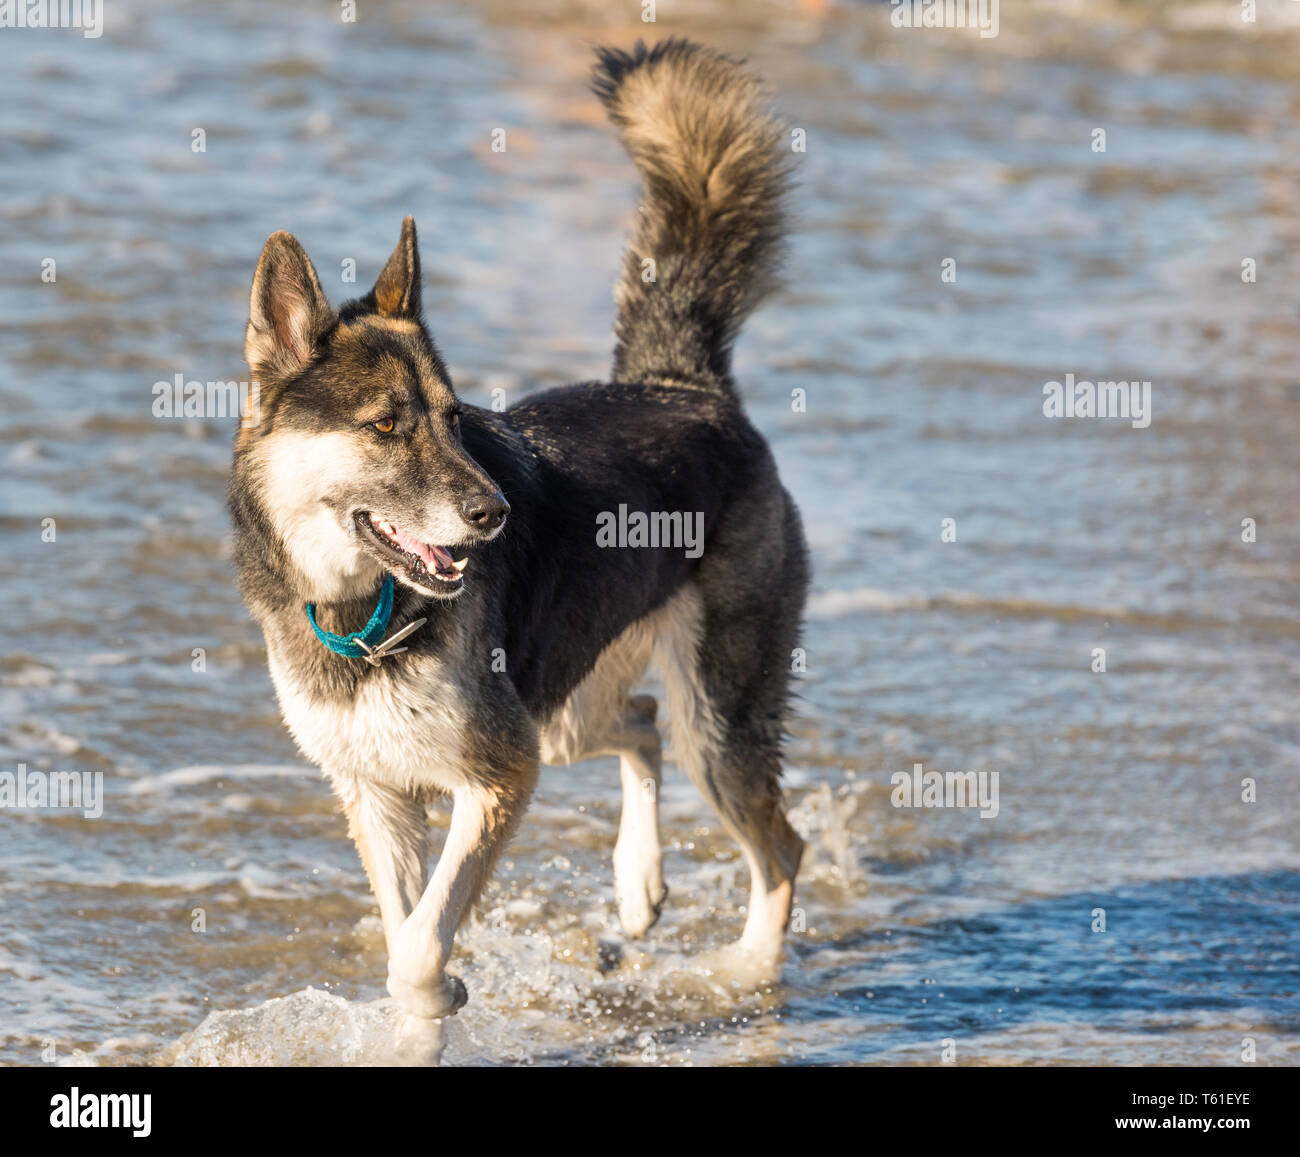 Dog Walking in Water in the Ocean Stock Photo